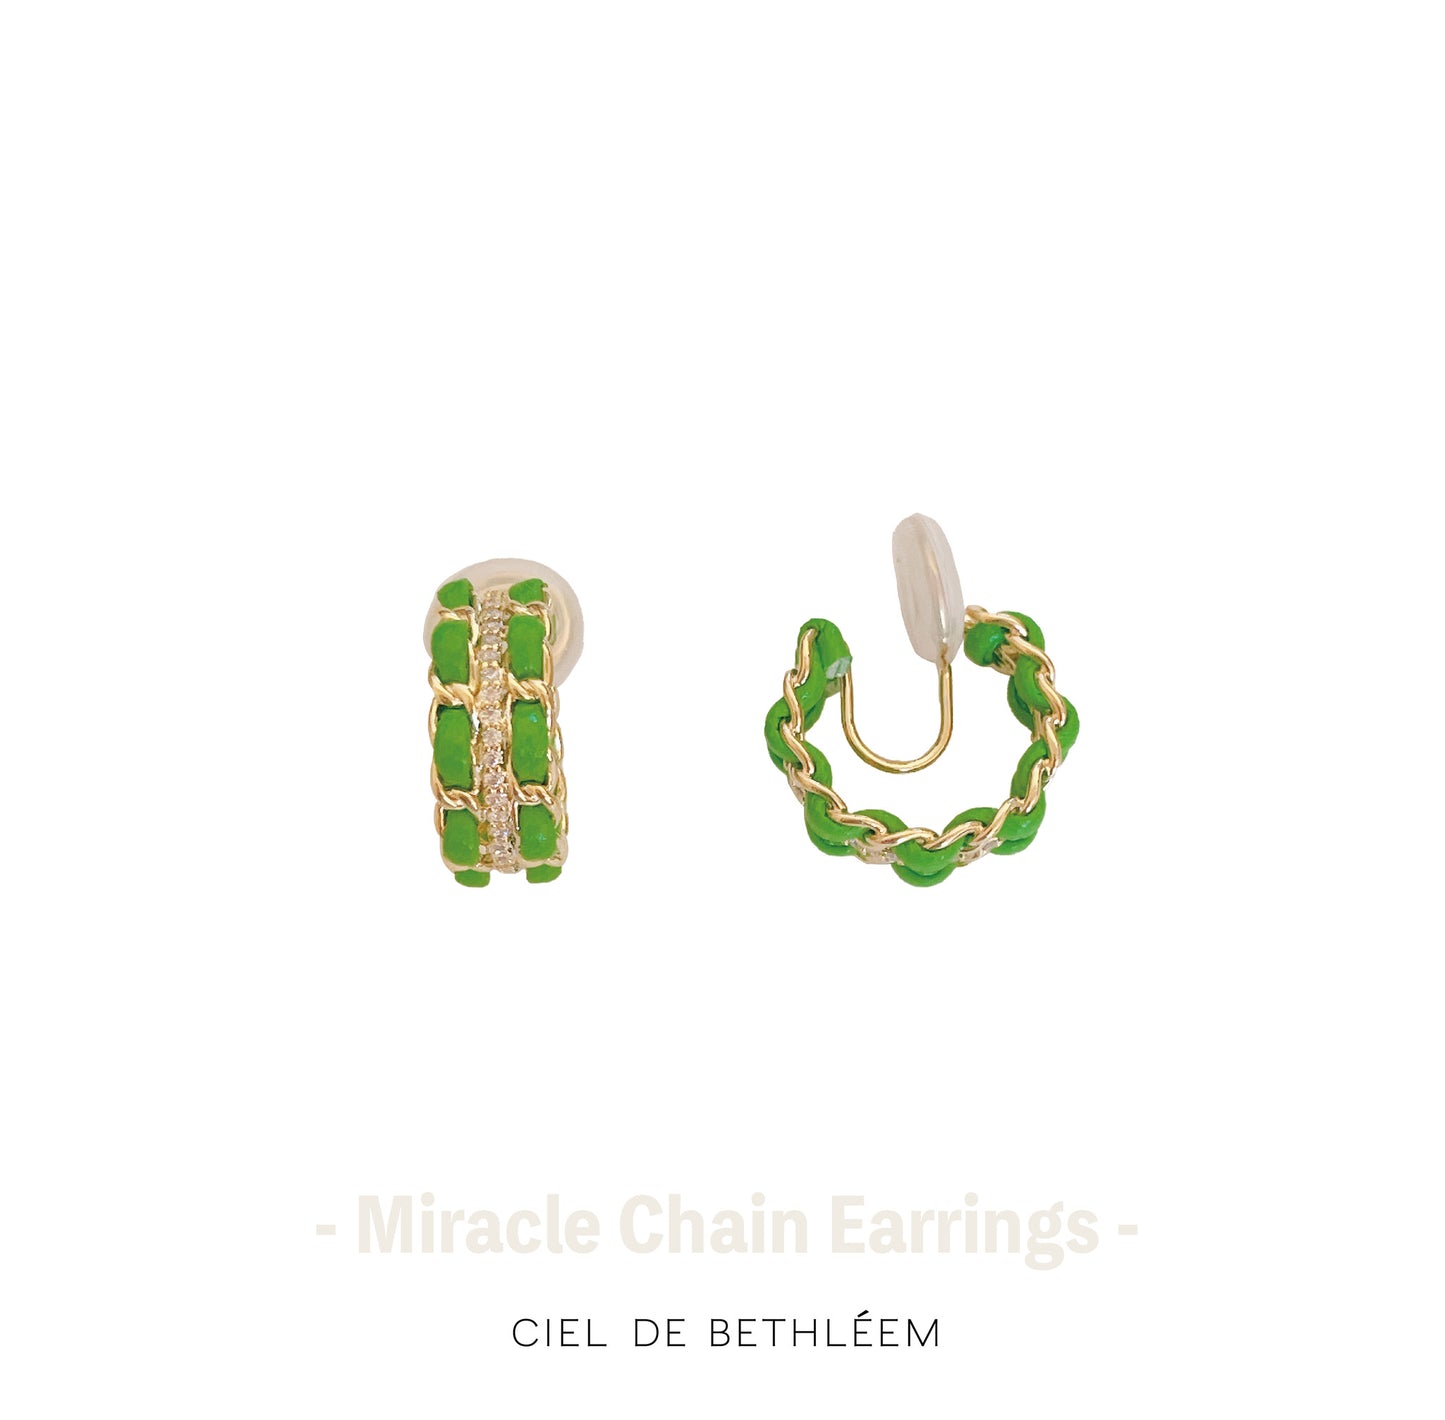 Miracle Chain Earrings